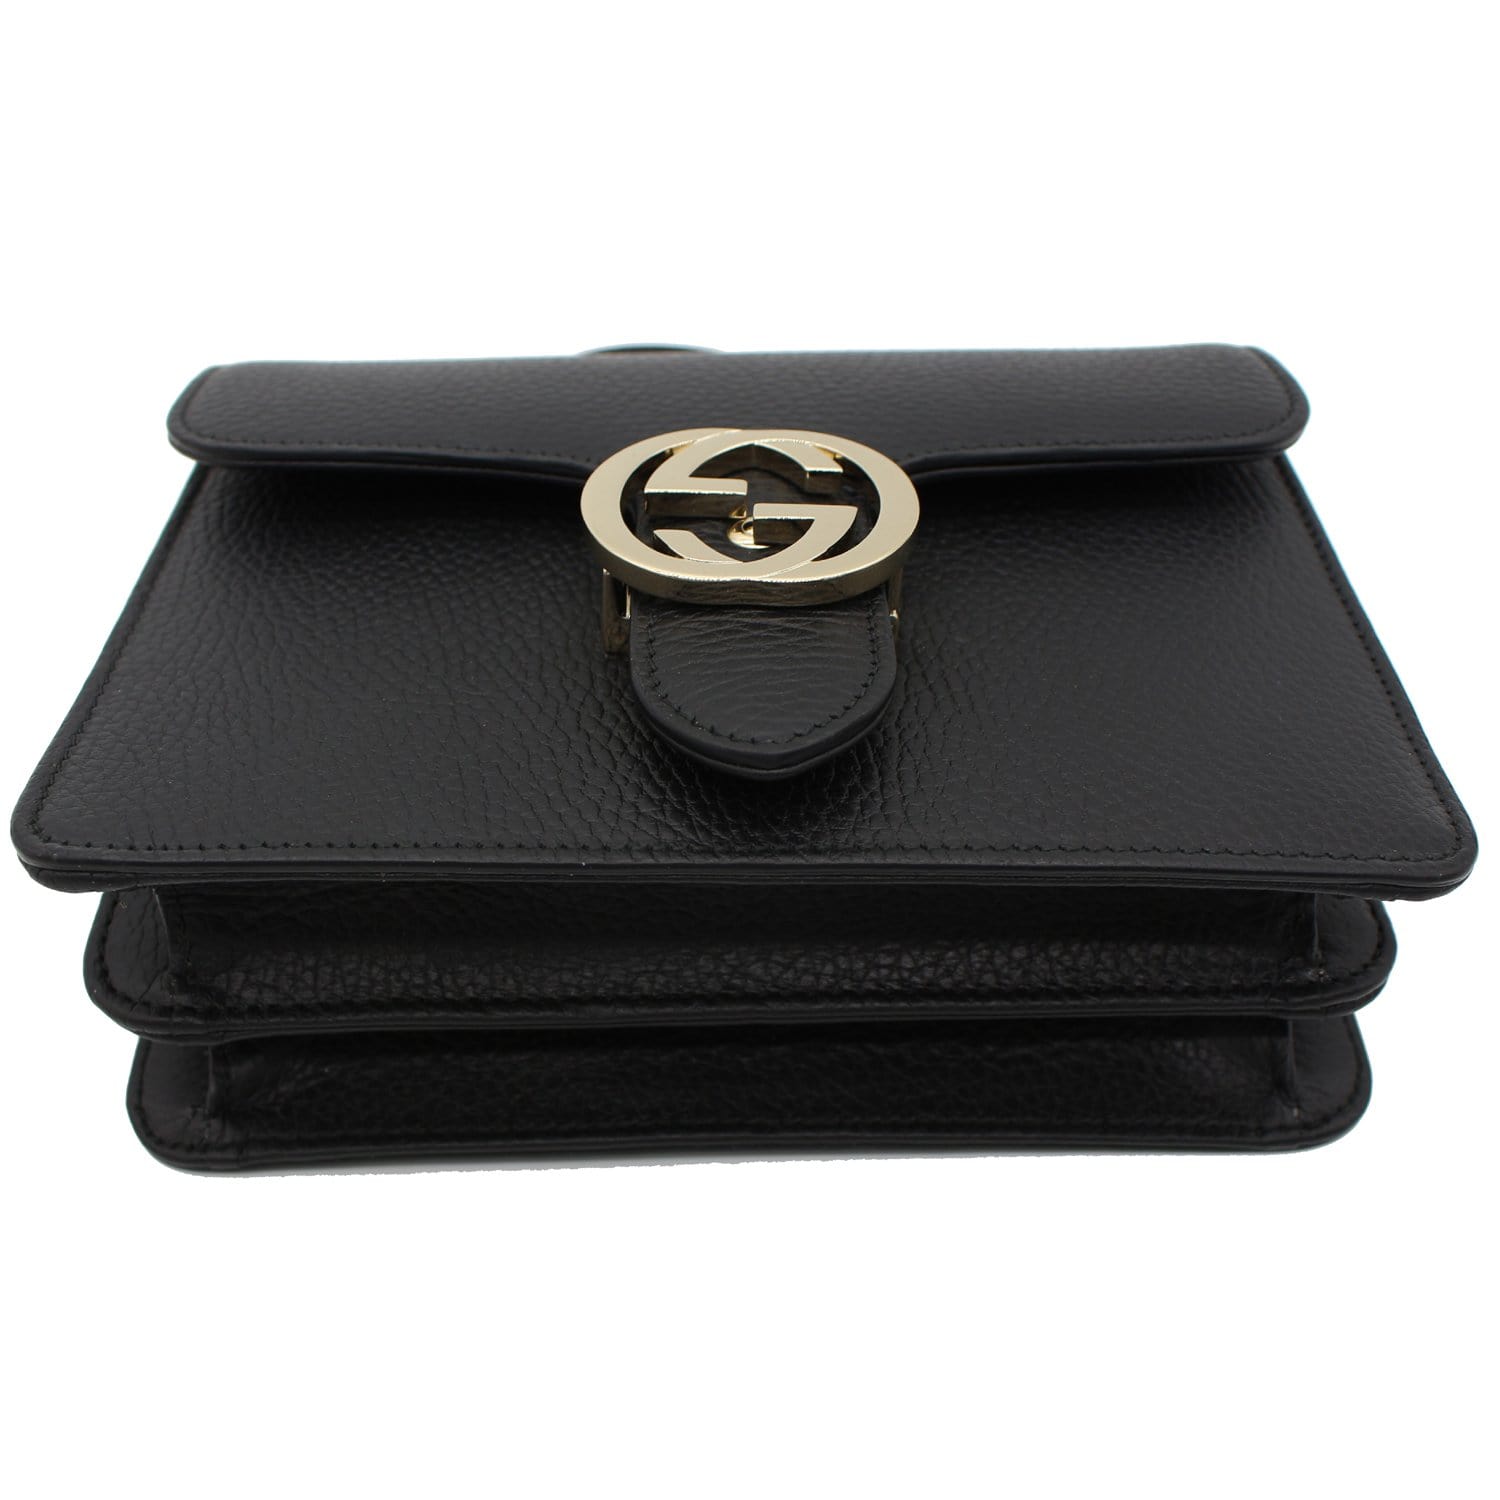 Gucci Interlocking GG Leather Crossbody Bag 510303-1000